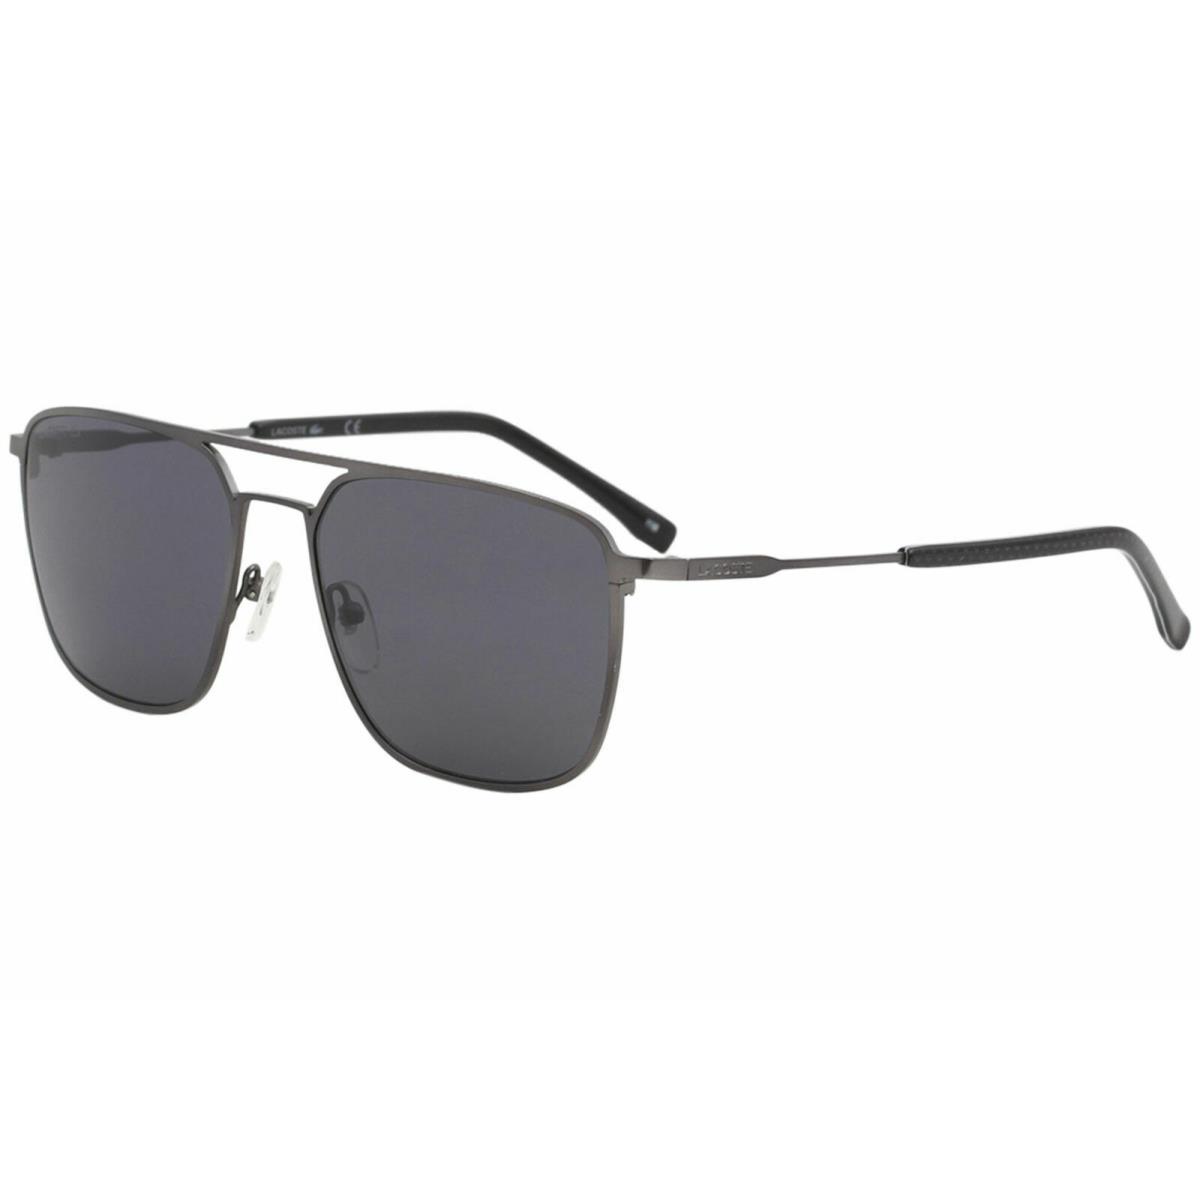 Lacoste L194s 033 57mm Gunmetal Grey Unisex Square Pilot Metal Sunglasses - Frame: Gray, Lens: Green